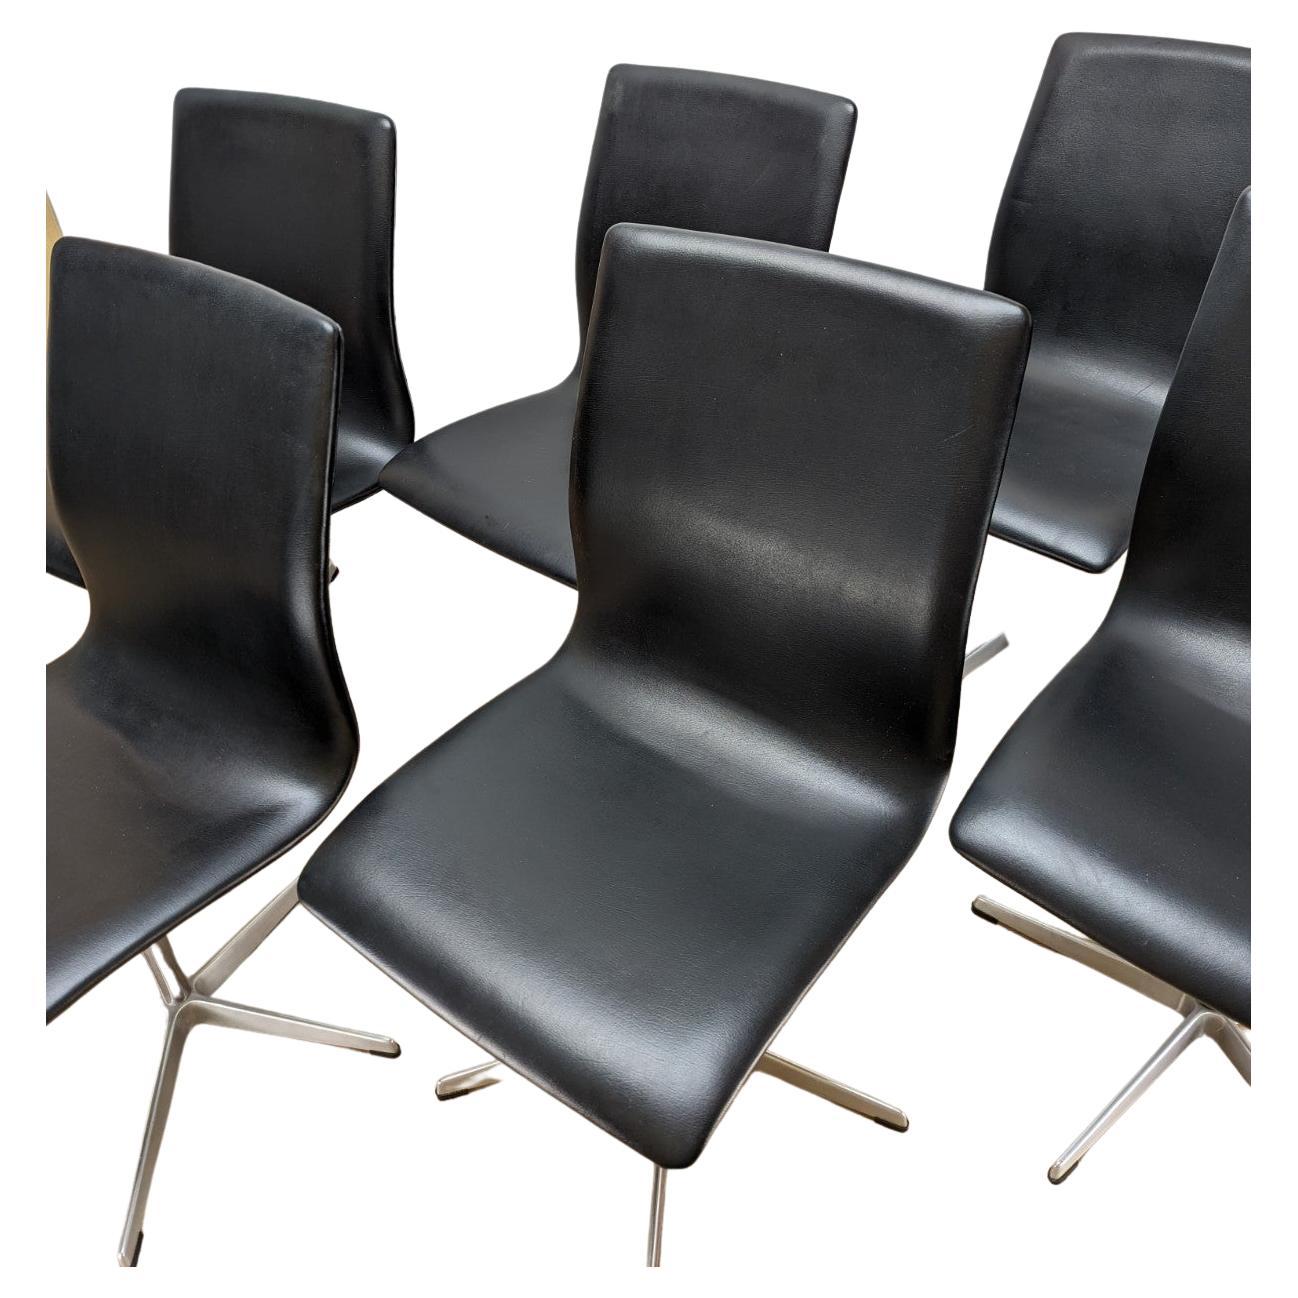 4 x Arne Jacobsen Oxford Chairs by Fritz Hansen, Black Vinyl and Aluminium Legs For Sale